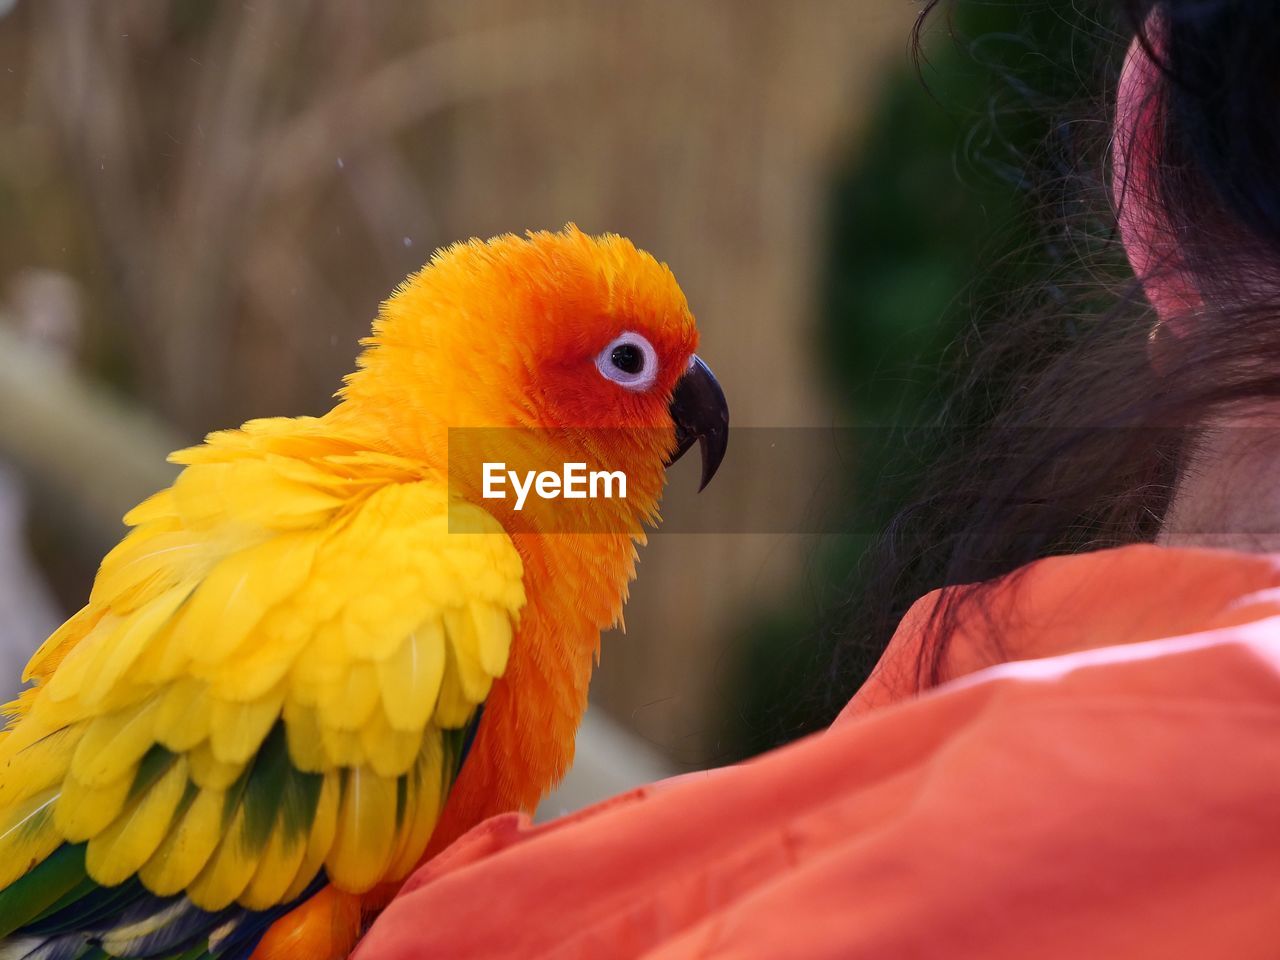 Close up of a sun parakeet sitting on a human shoulder